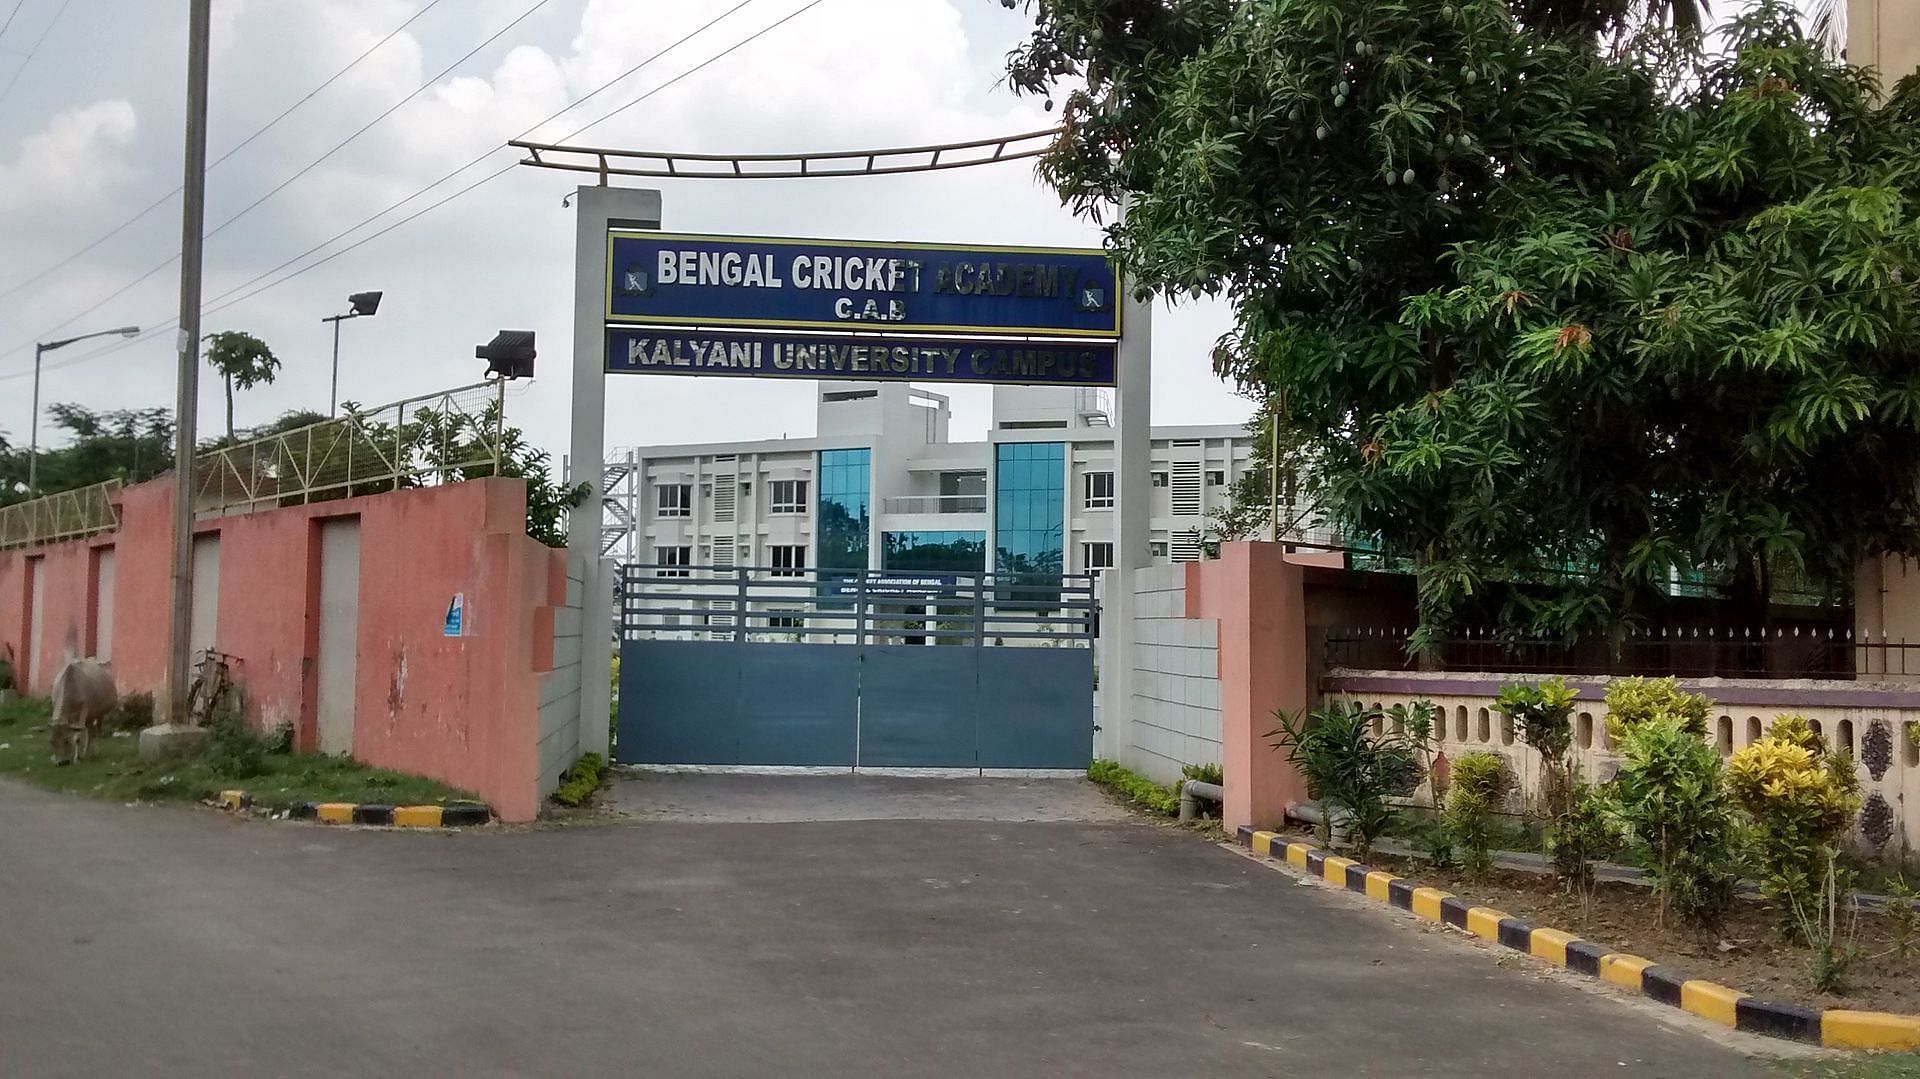 The BCA Academy Stadium in Kalyani (Source: Wikipedia)